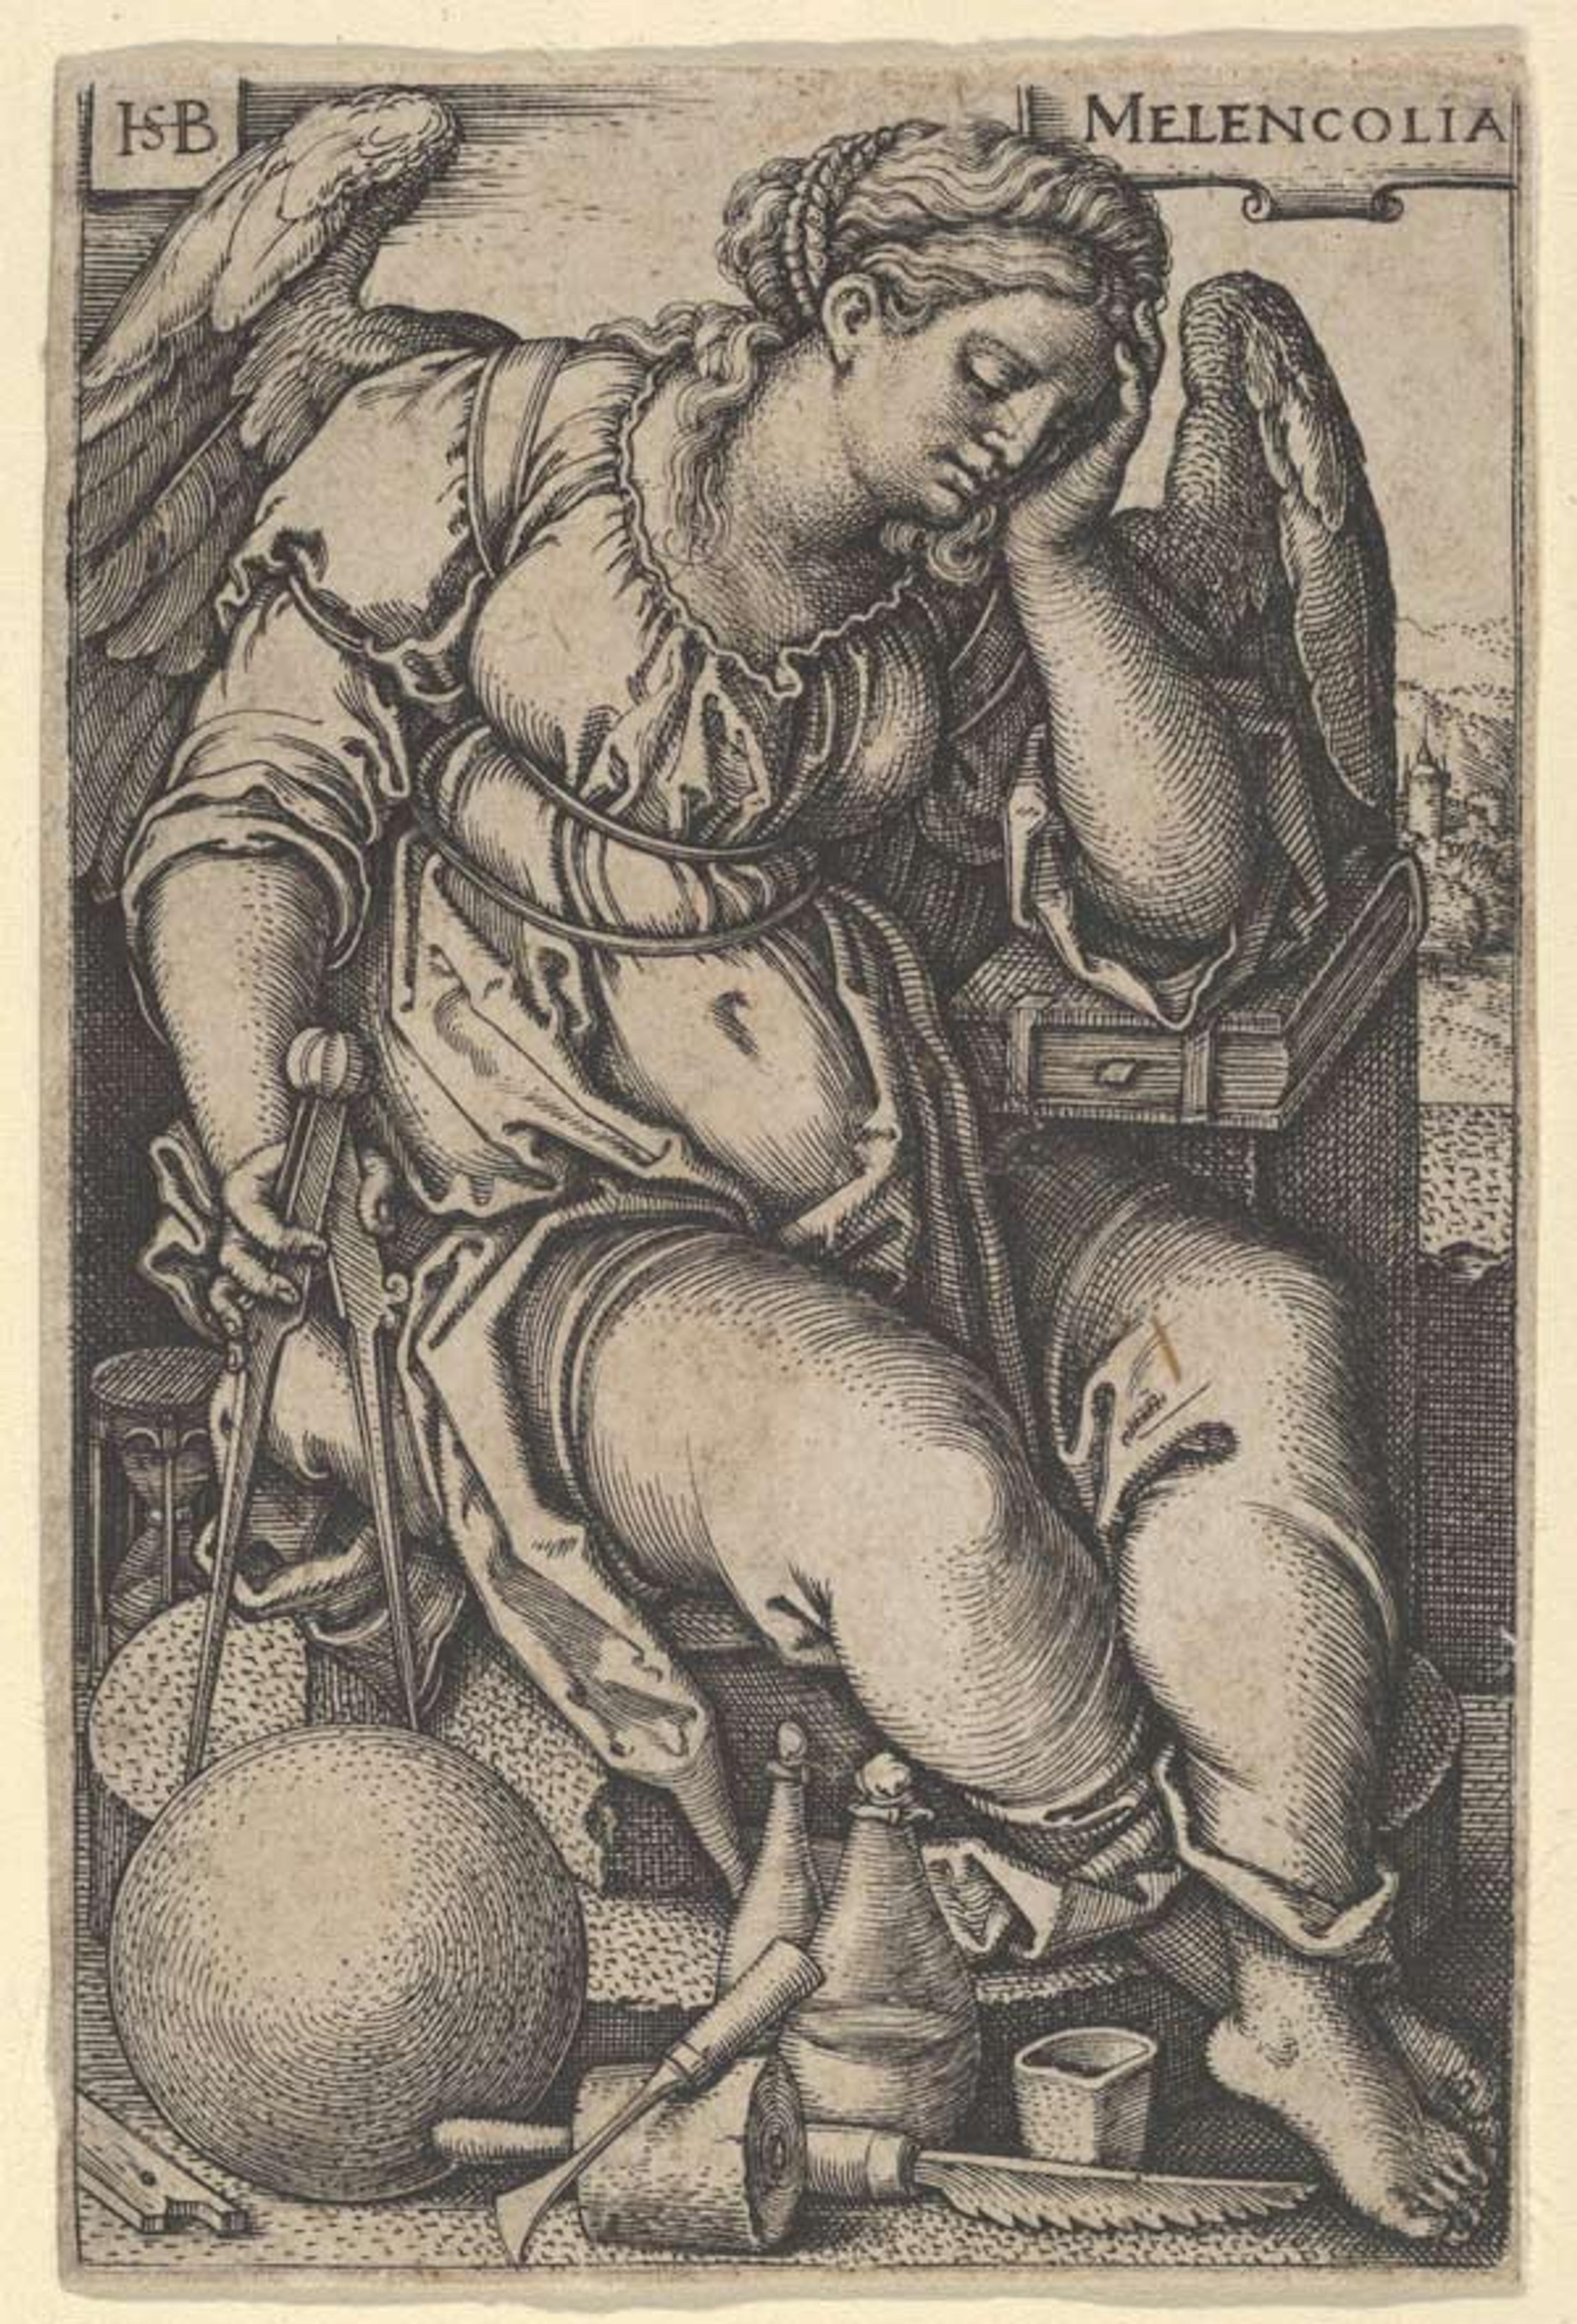 Sebald Beham (German, 1500-1550), Melancholia, 1539